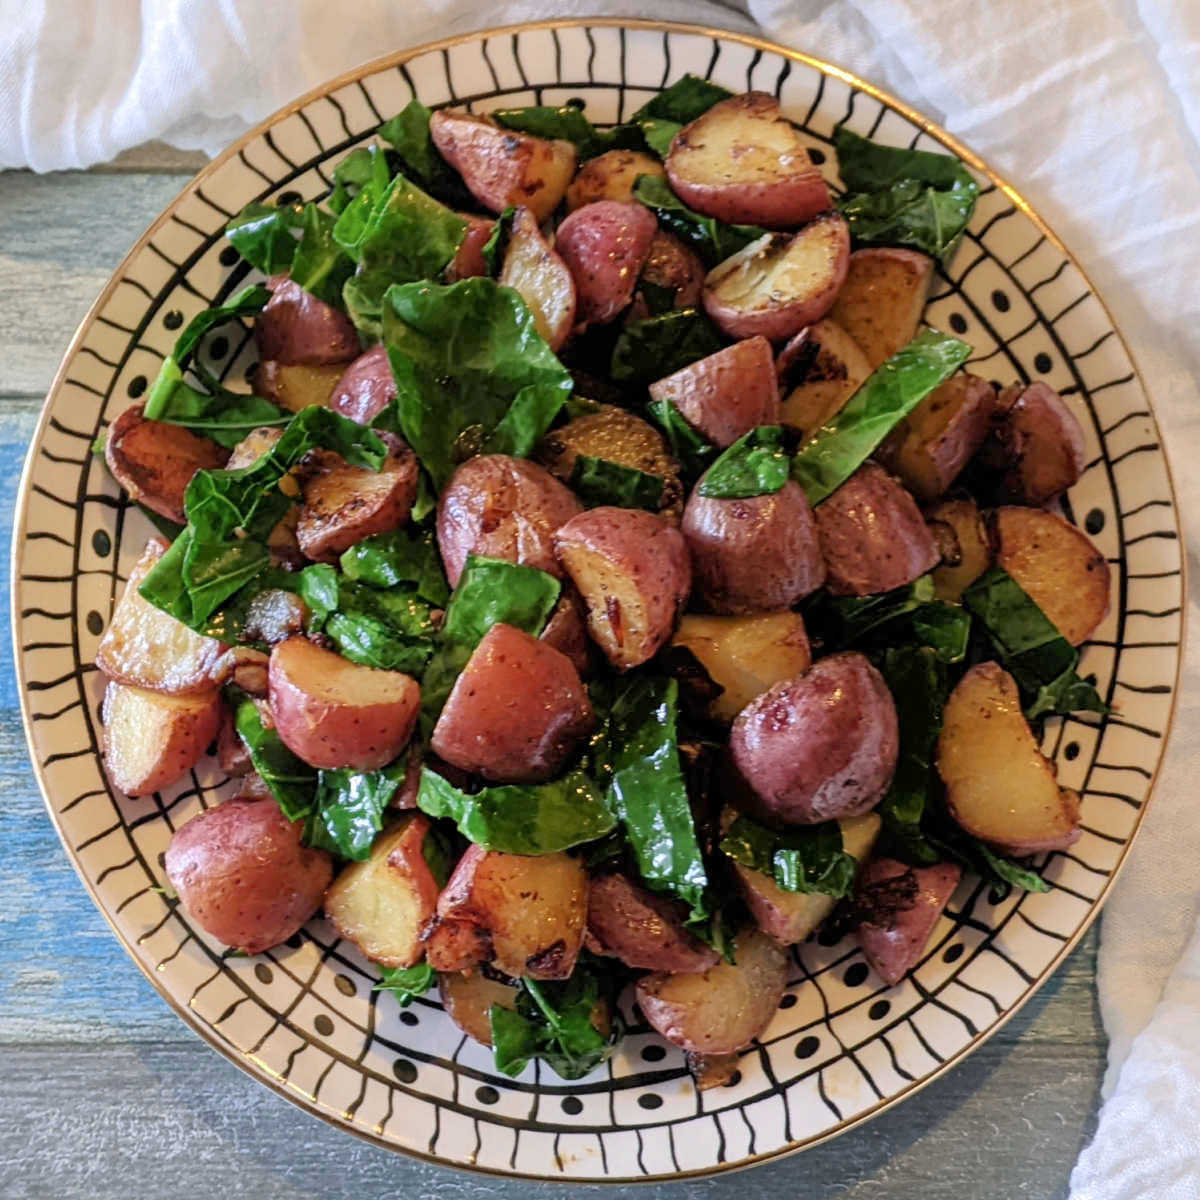 breakfast potatoes and collard greens